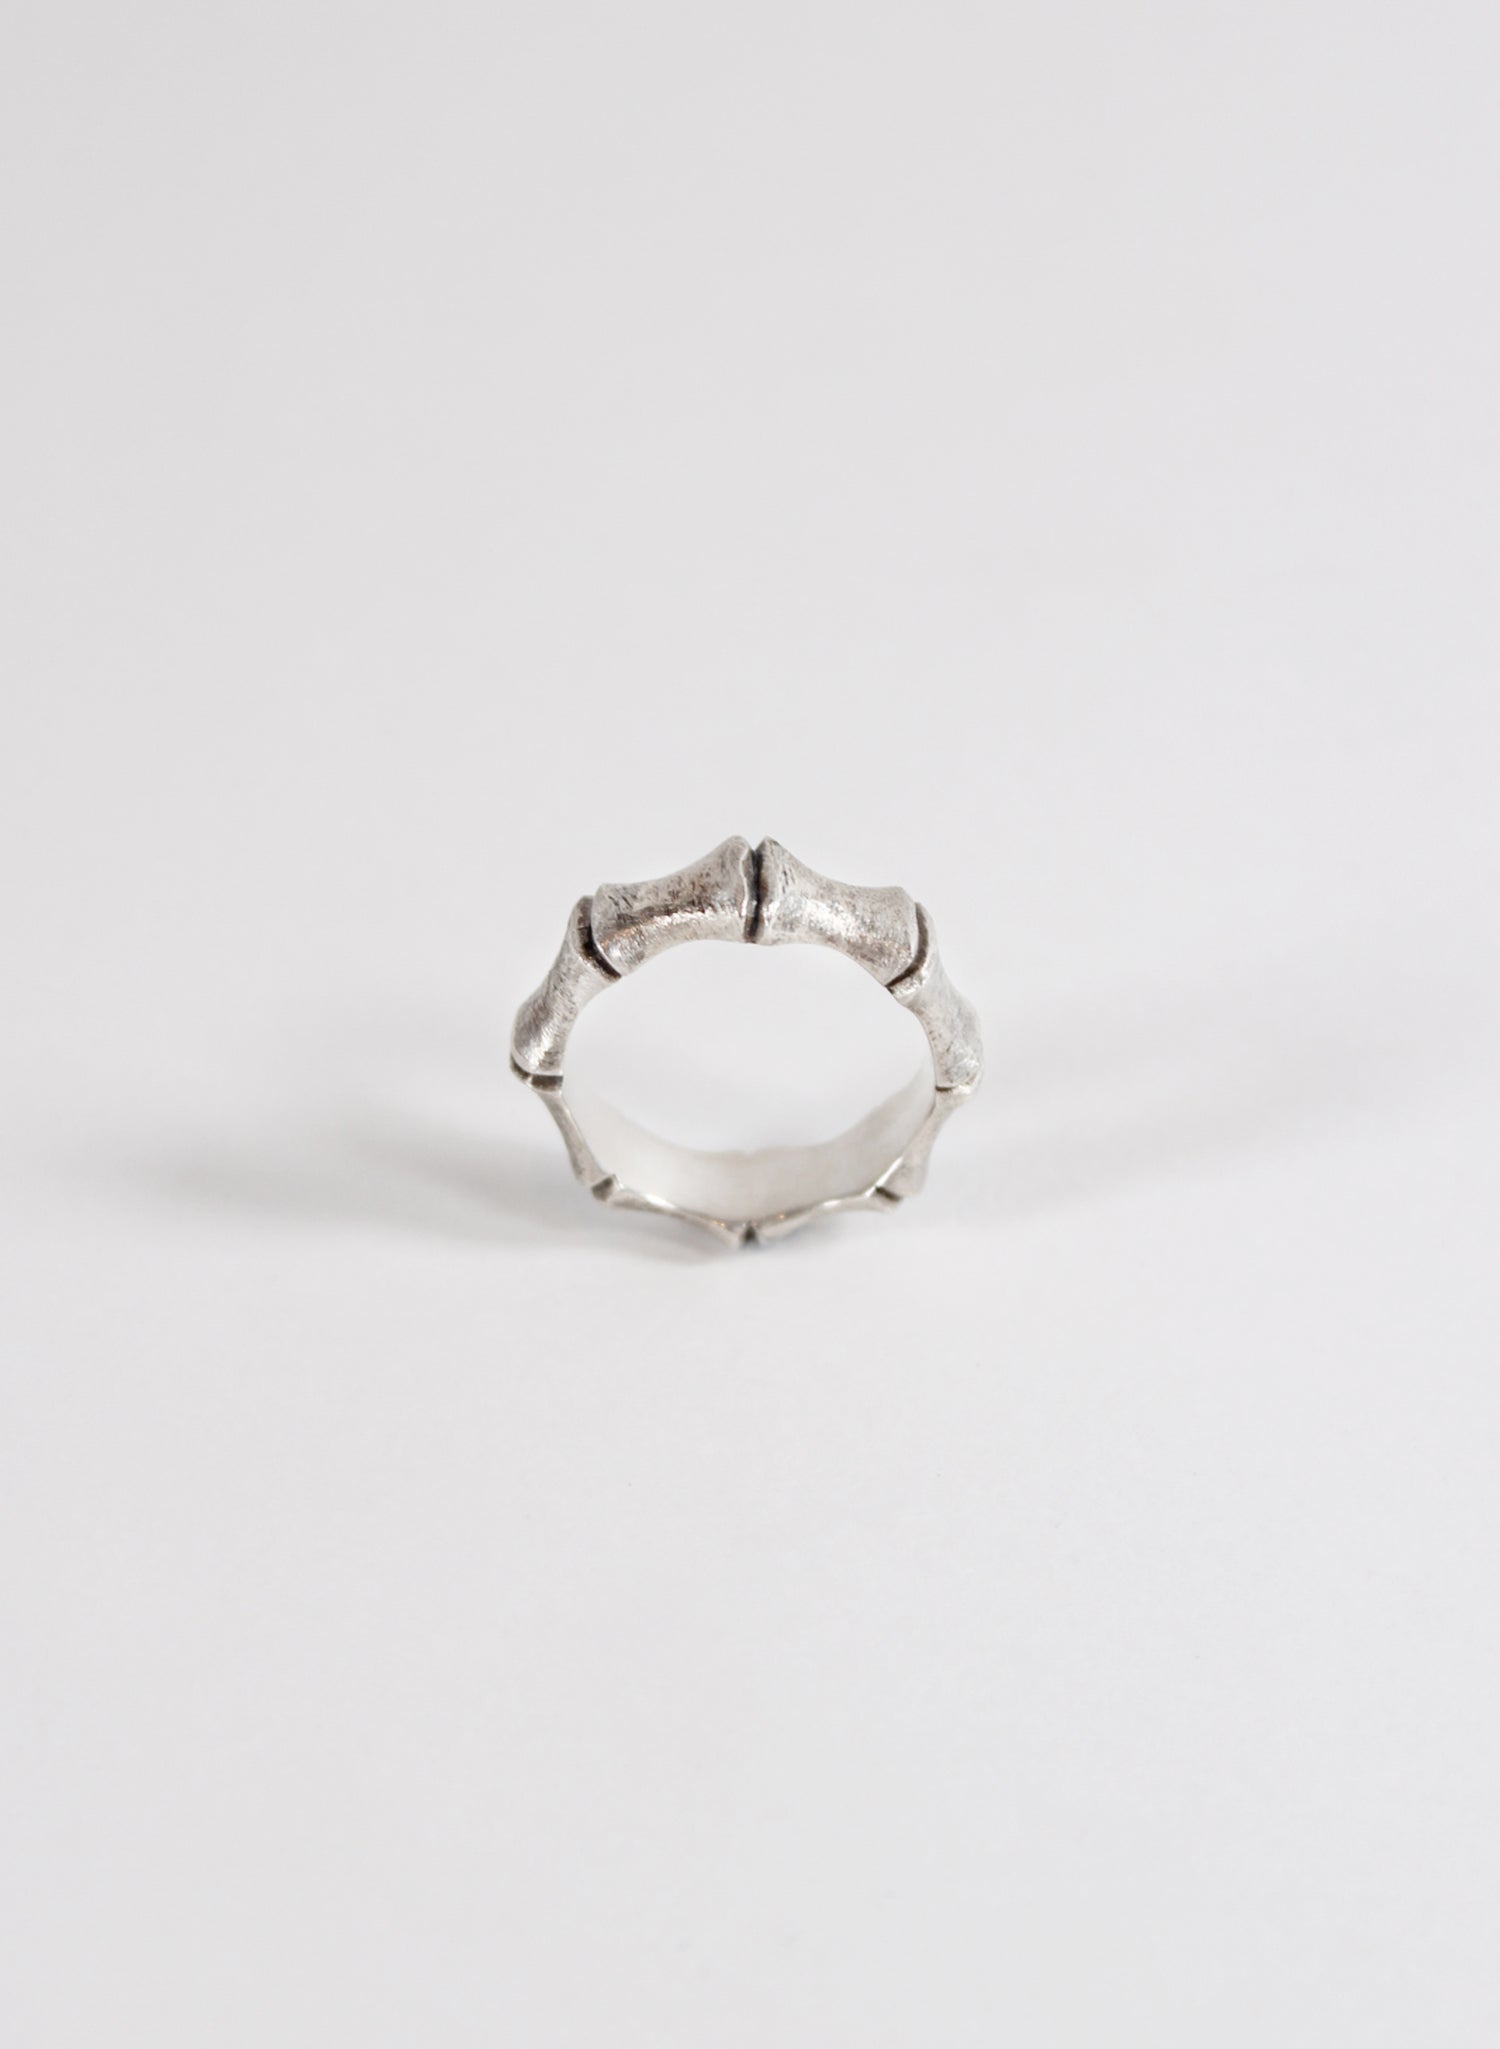 Tuaiwi Ring (8 Segment) - Sterling Silver